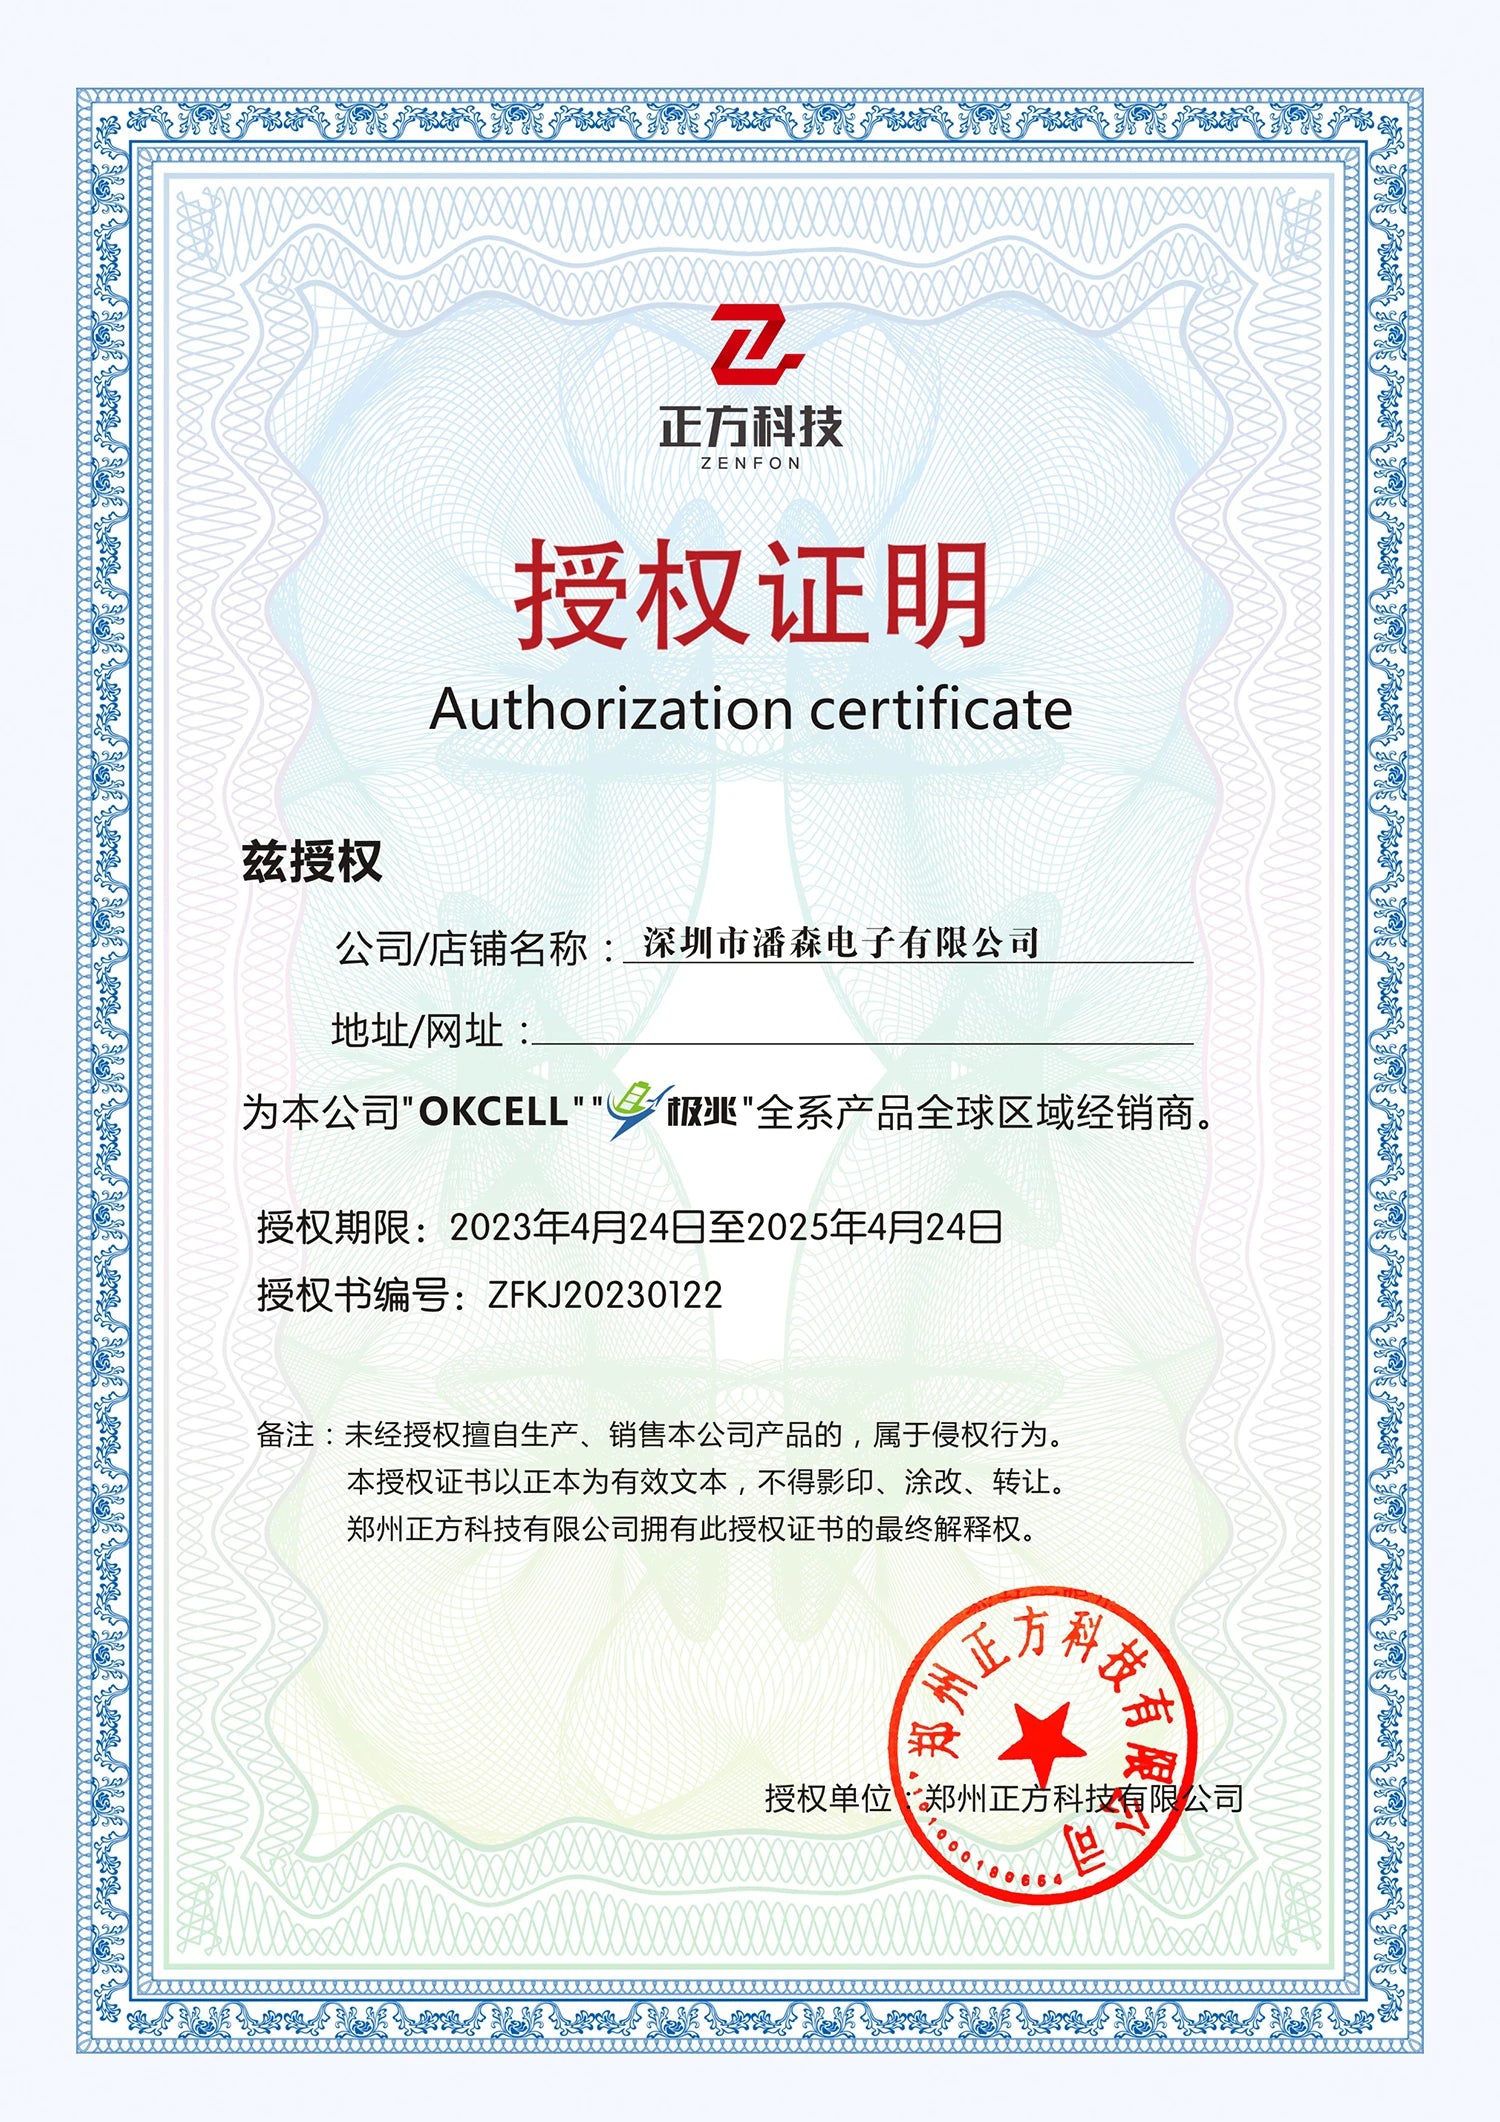 ZEN F 0 N #EtriEHH Authorization certificate rztz